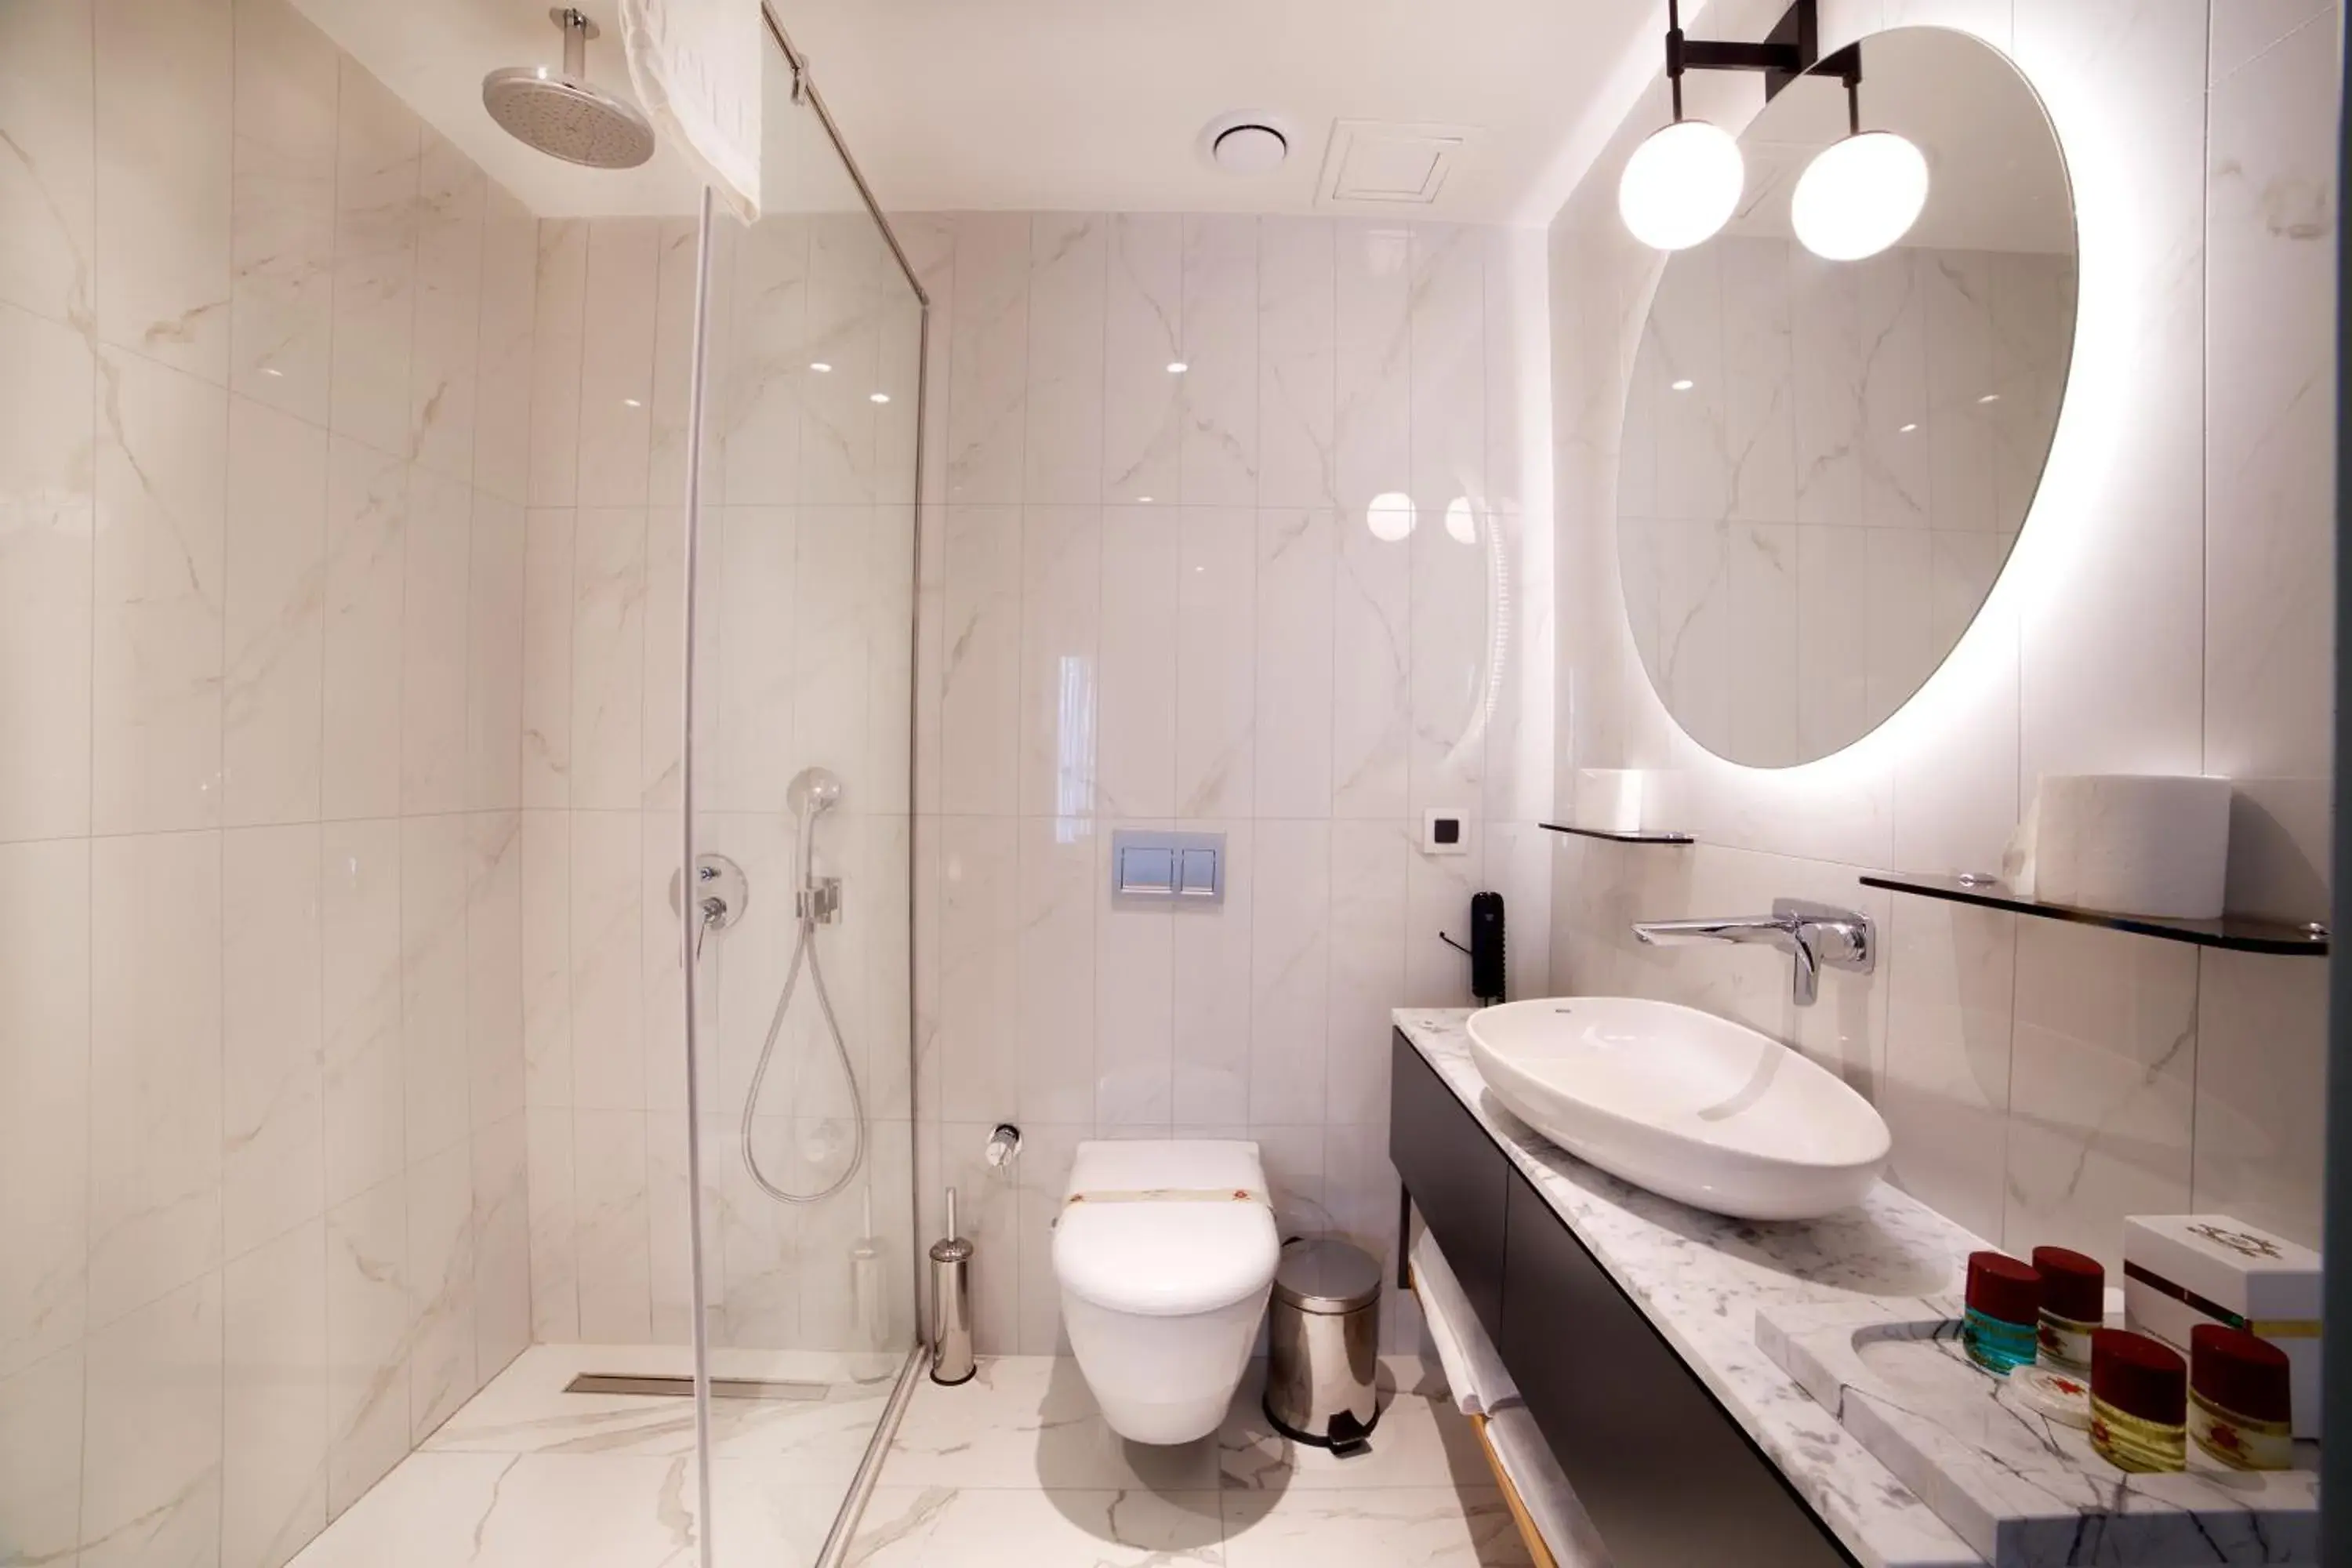 Bathroom in Dosso Dossi Hotels Yenikapı